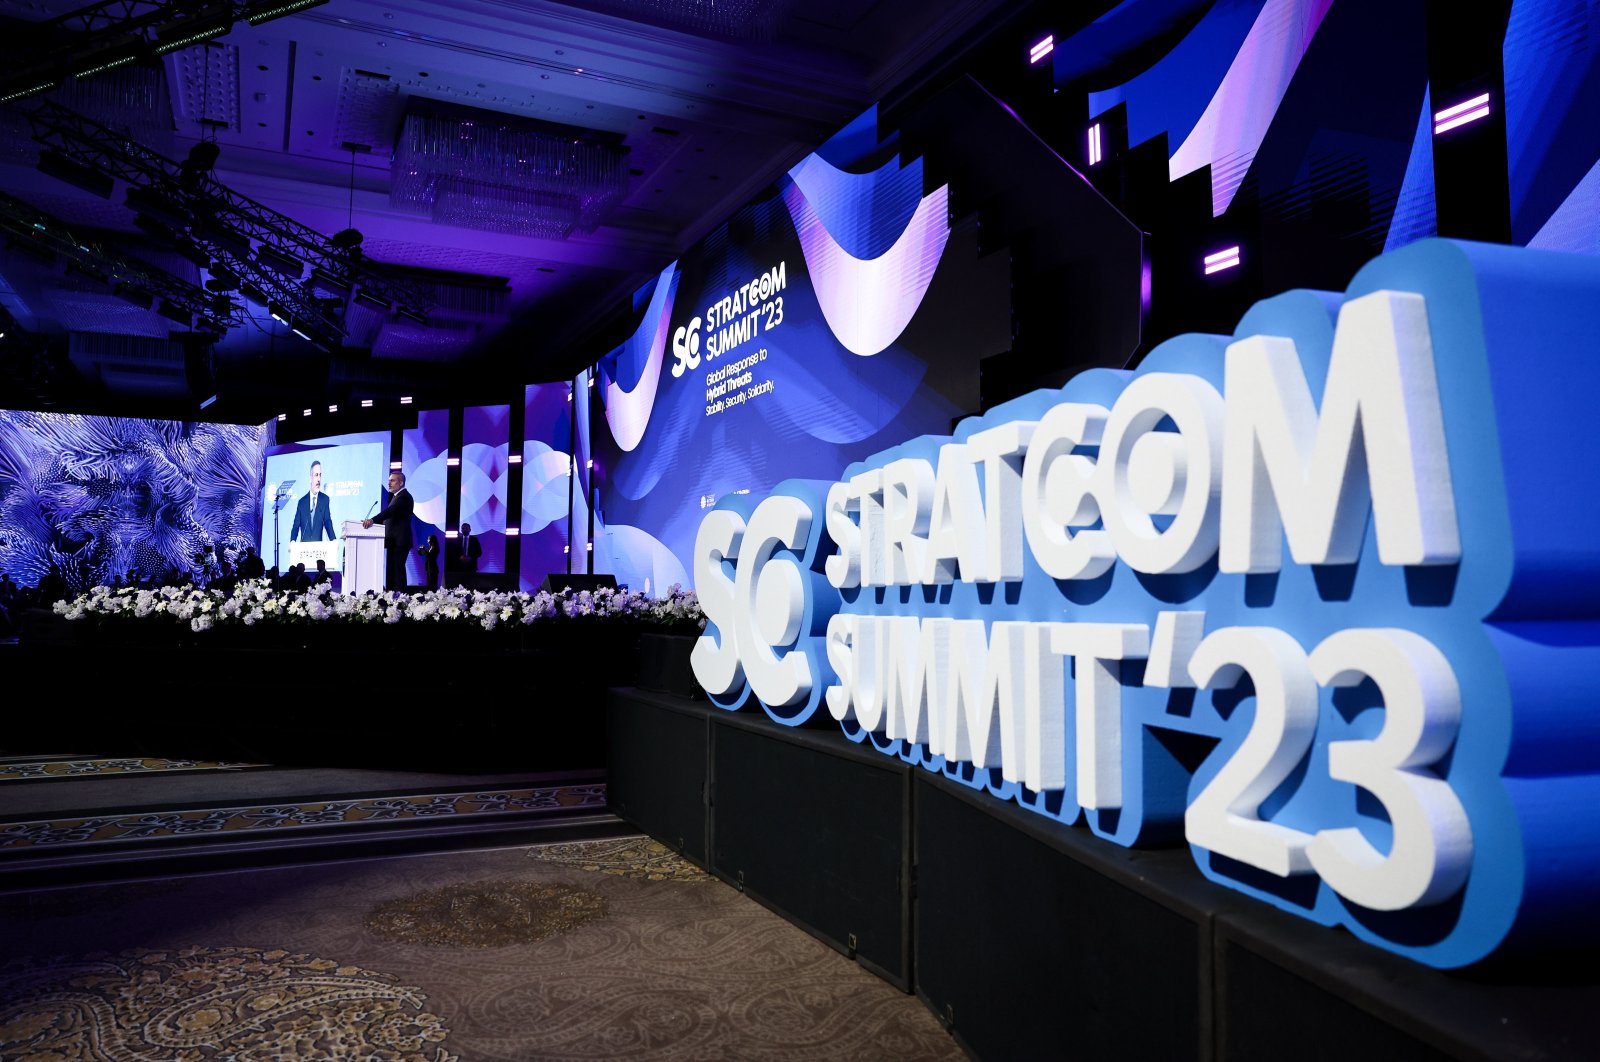 Foreign Minister Hakan Fidan speaks at the Stratcom Summit 2023 in Istanbul, Türkiye, Nov. 24, 2022. (AA Photo)